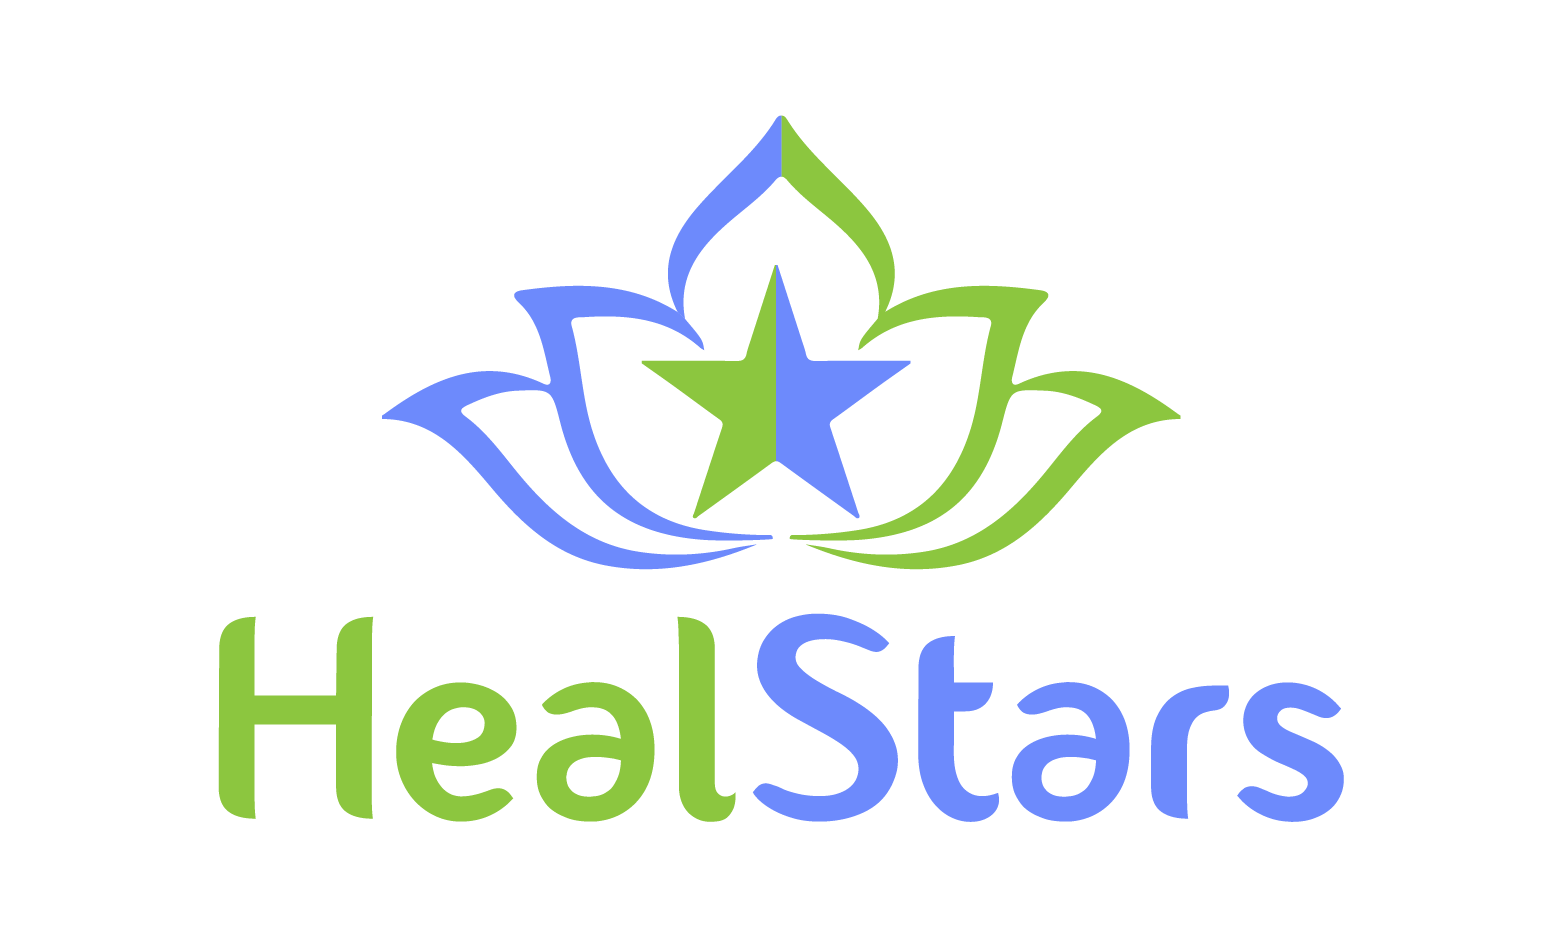 HealStars.com - Creative brandable domain for sale